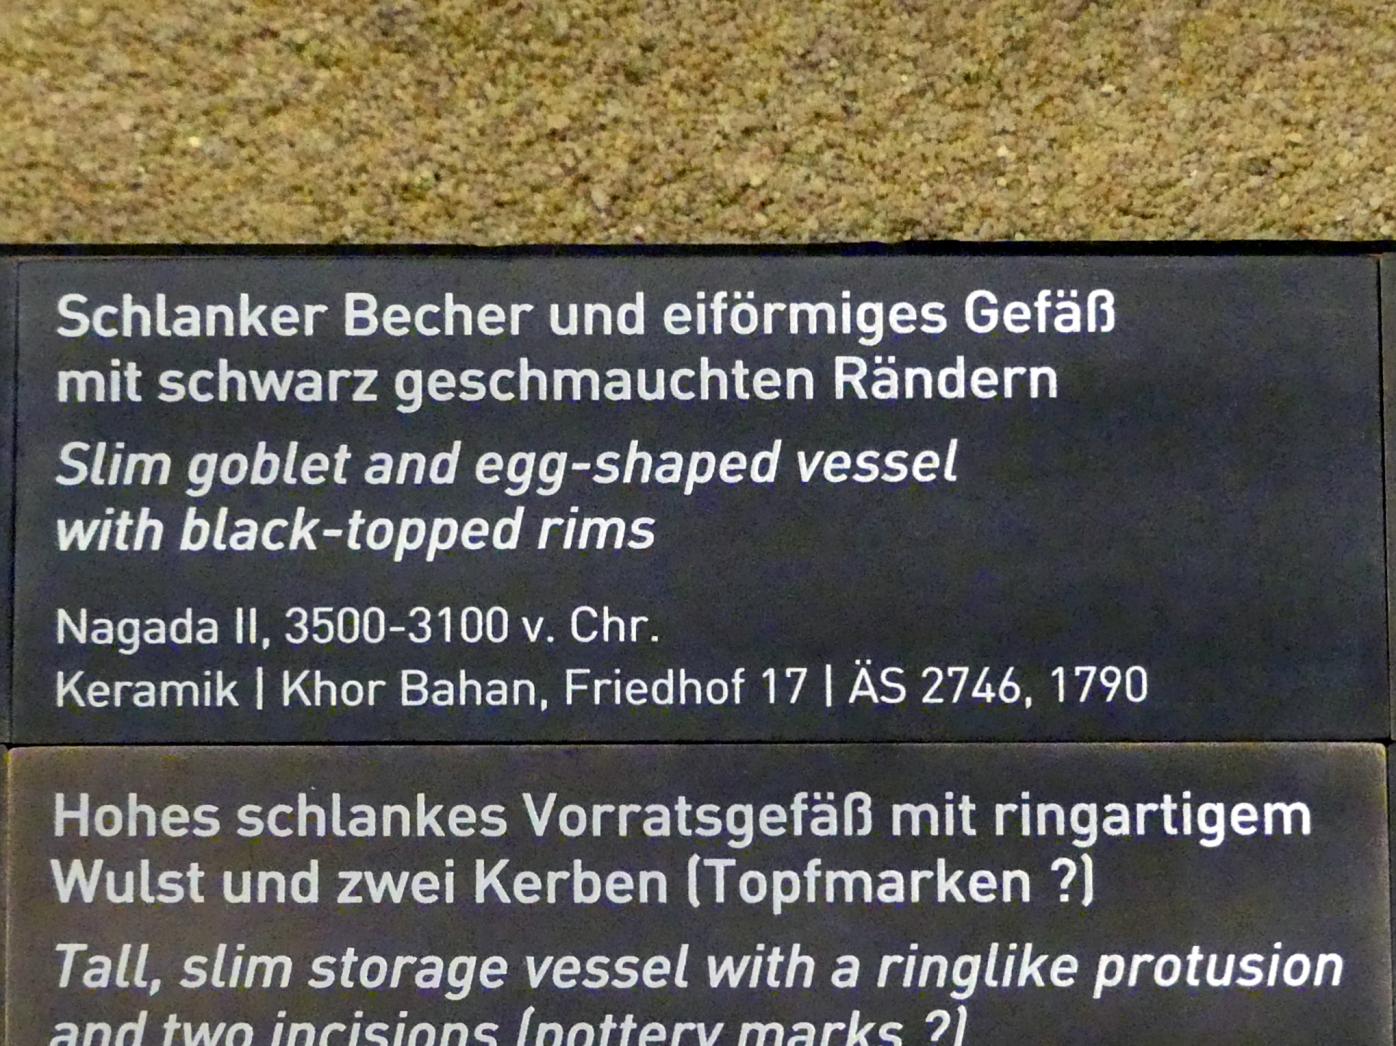 Eiförmiges Gefäß mit schwarz geschmauchtem Rand, Naqada II, 3700 - 3100 v. Chr., 3500 - 3100 v. Chr., Bild 2/2